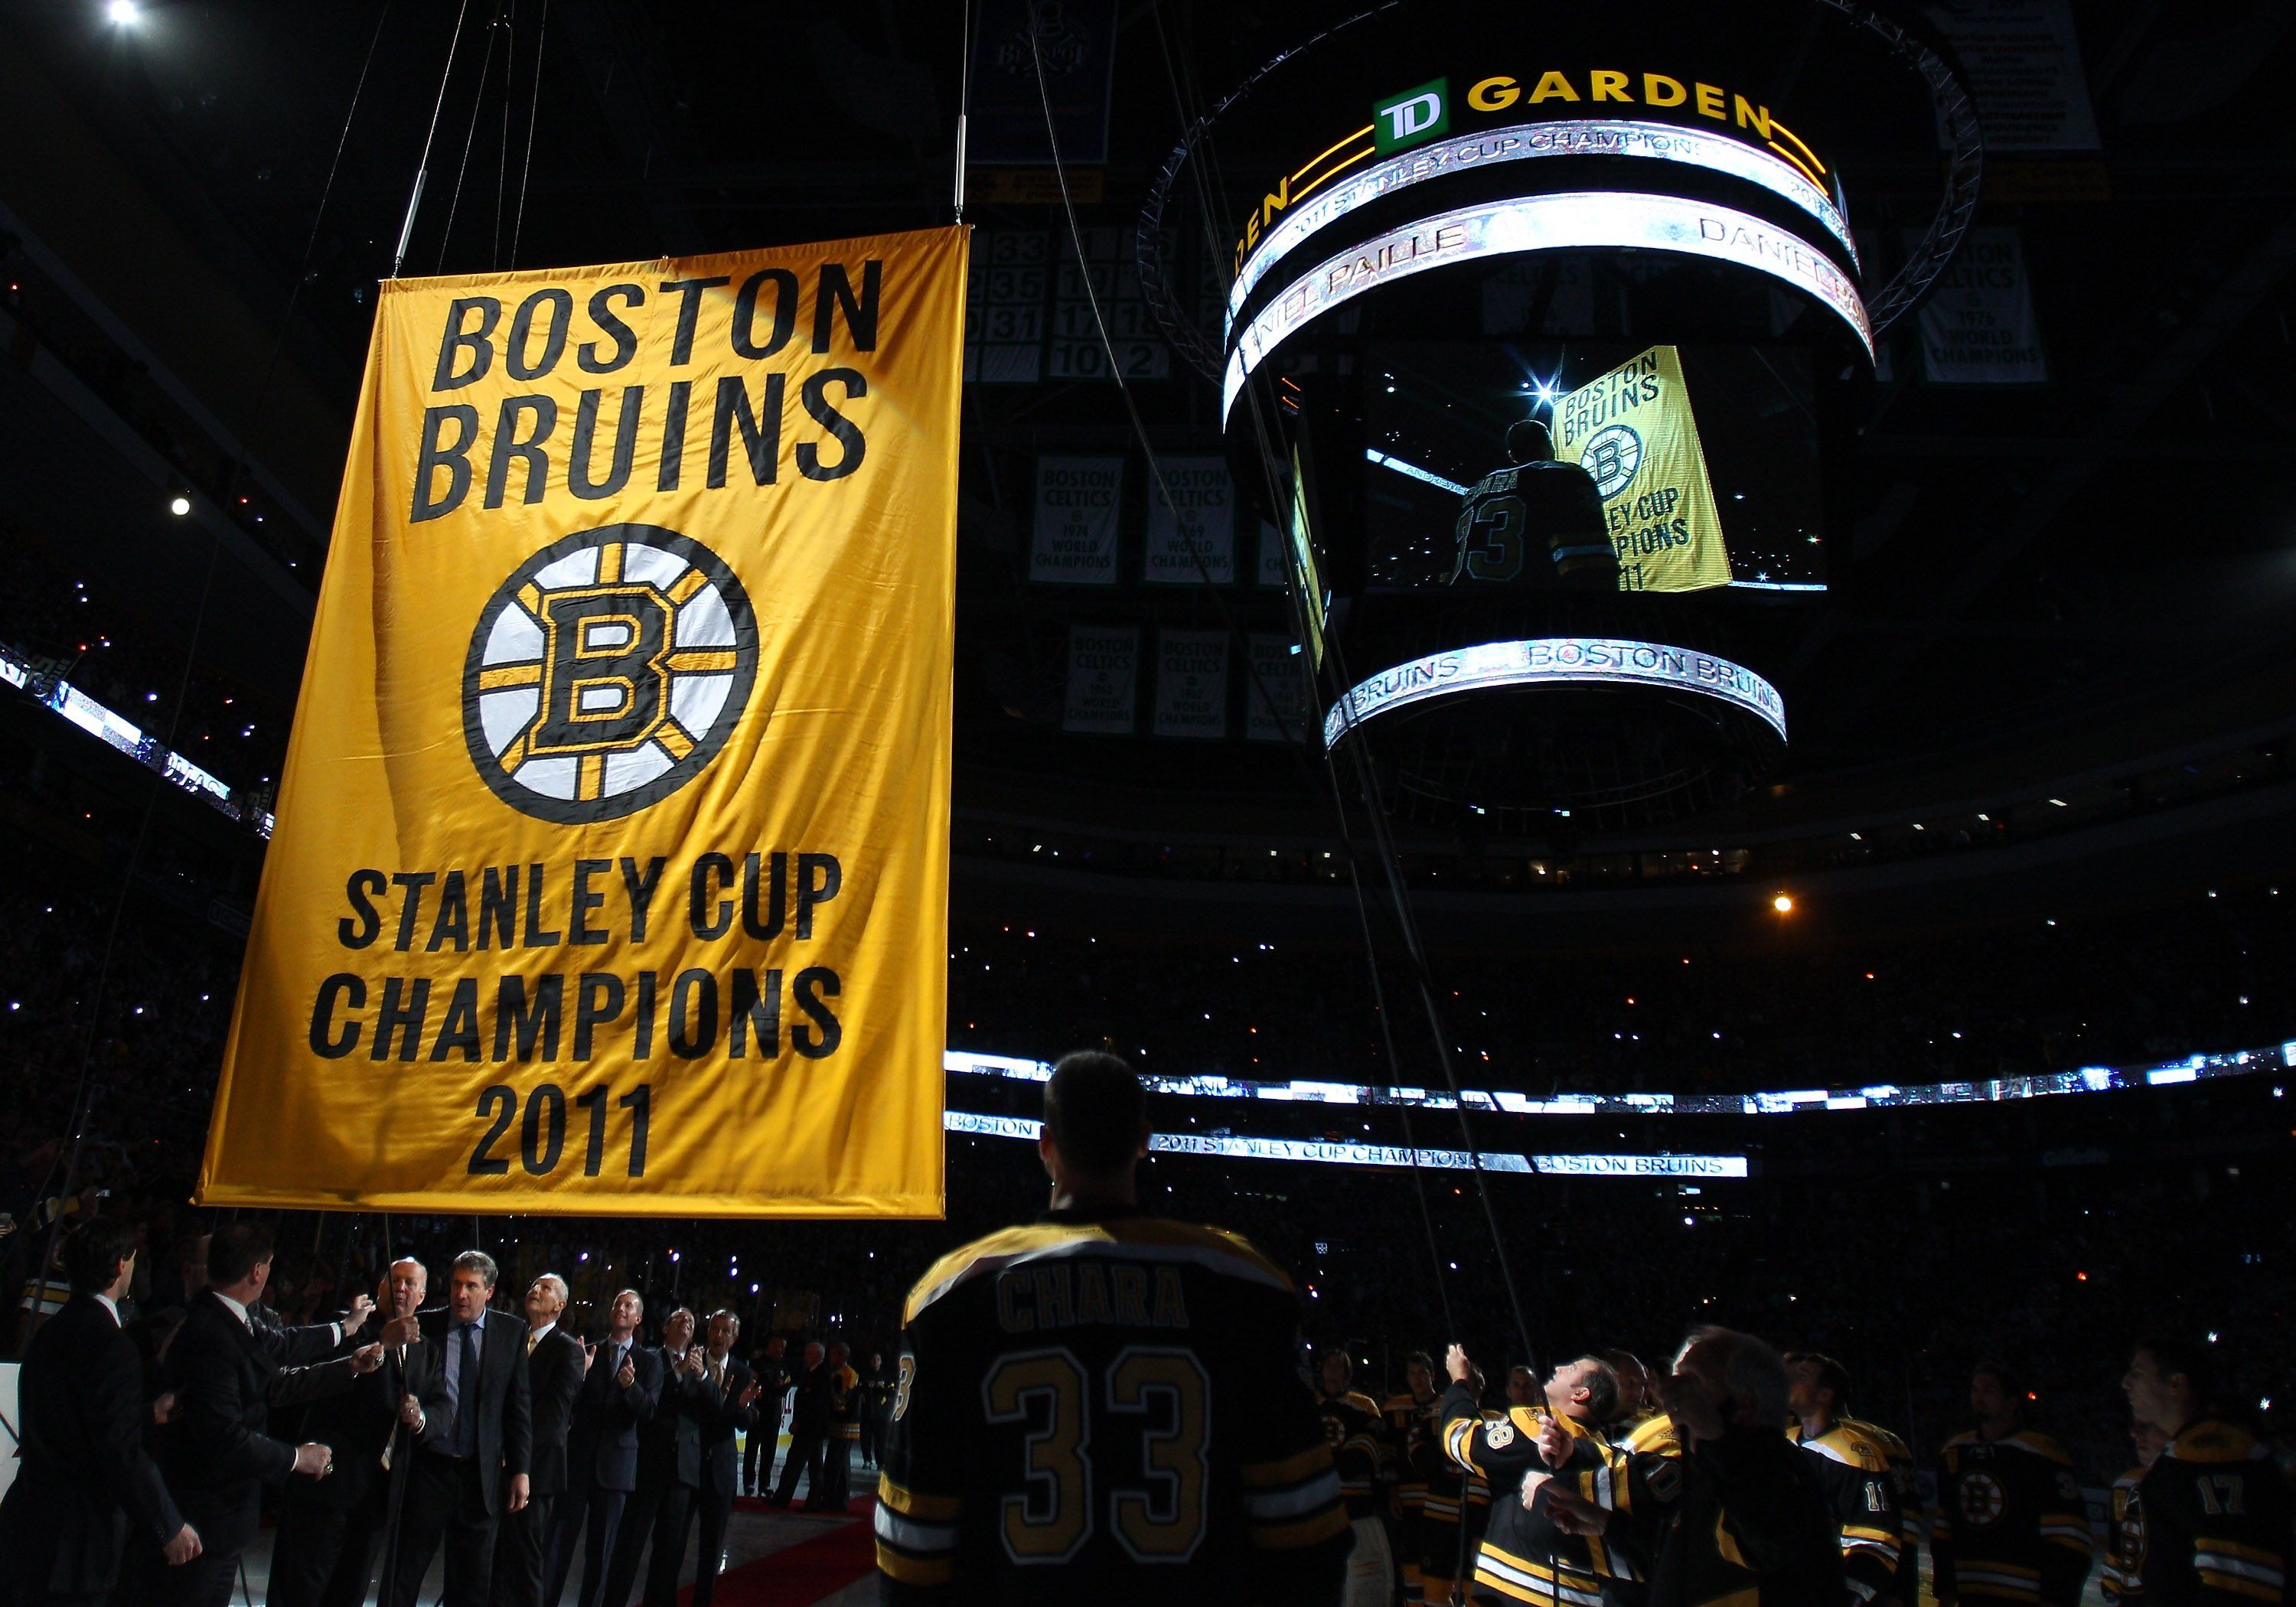 Boston Bruins Backgrounds - Wallpaper Zone